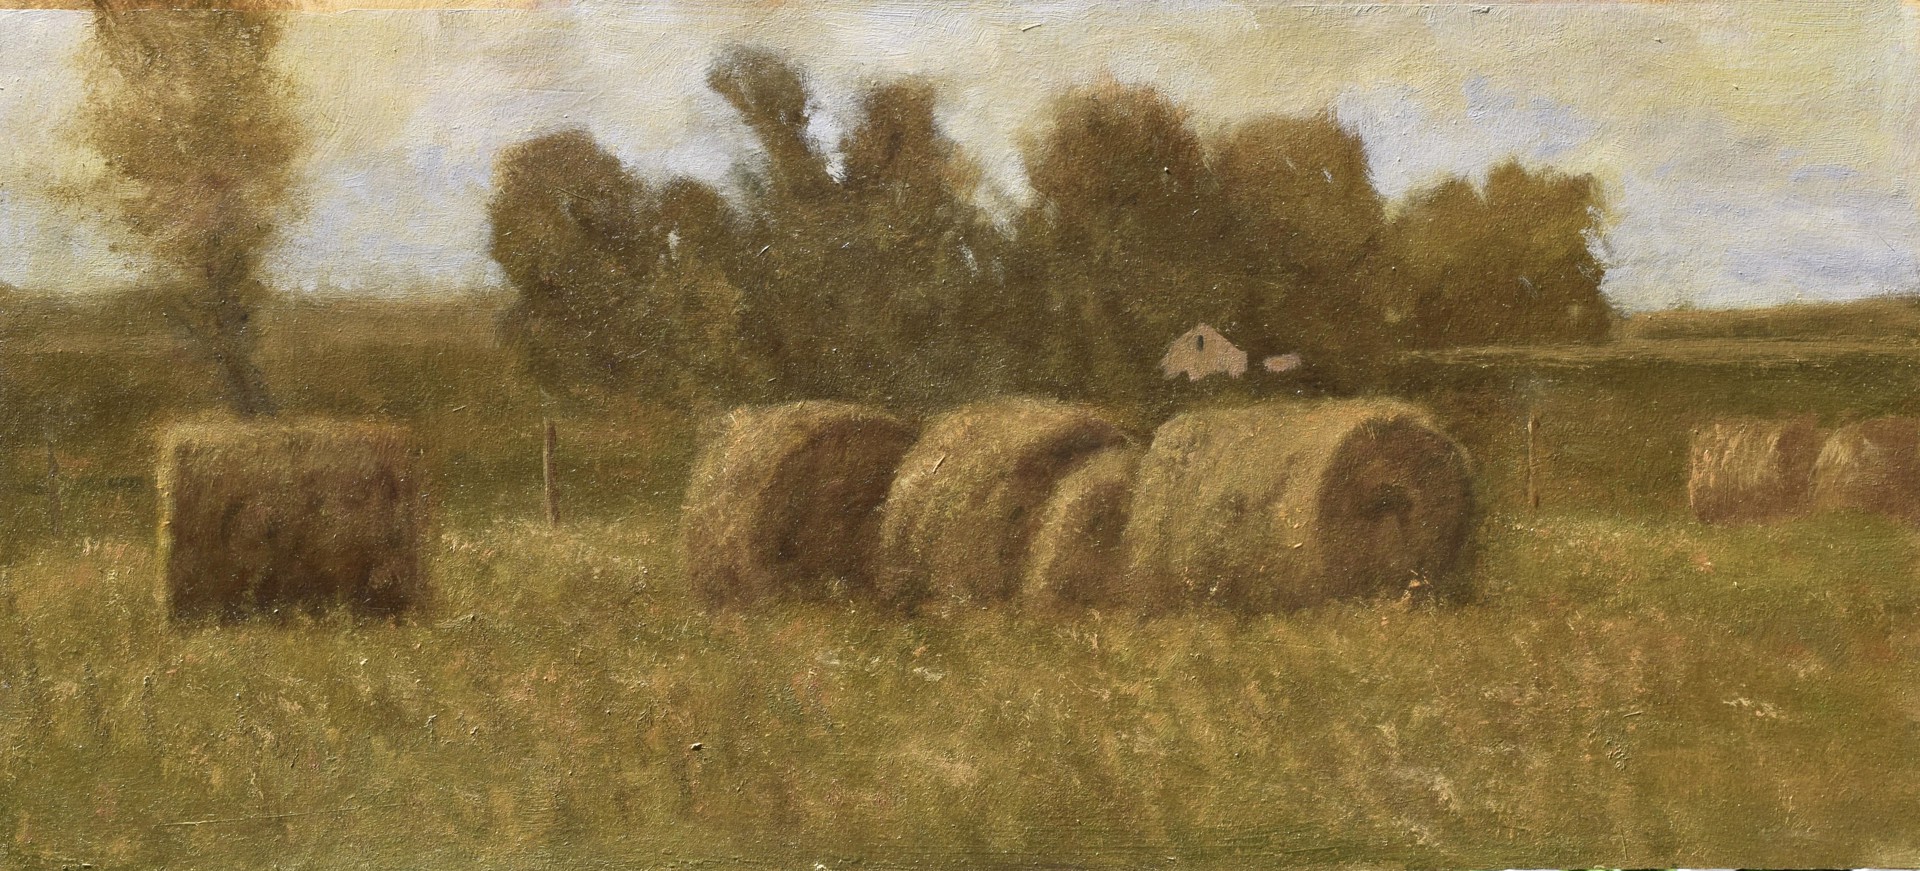 Summer Hay Field by Ray L. Knaub